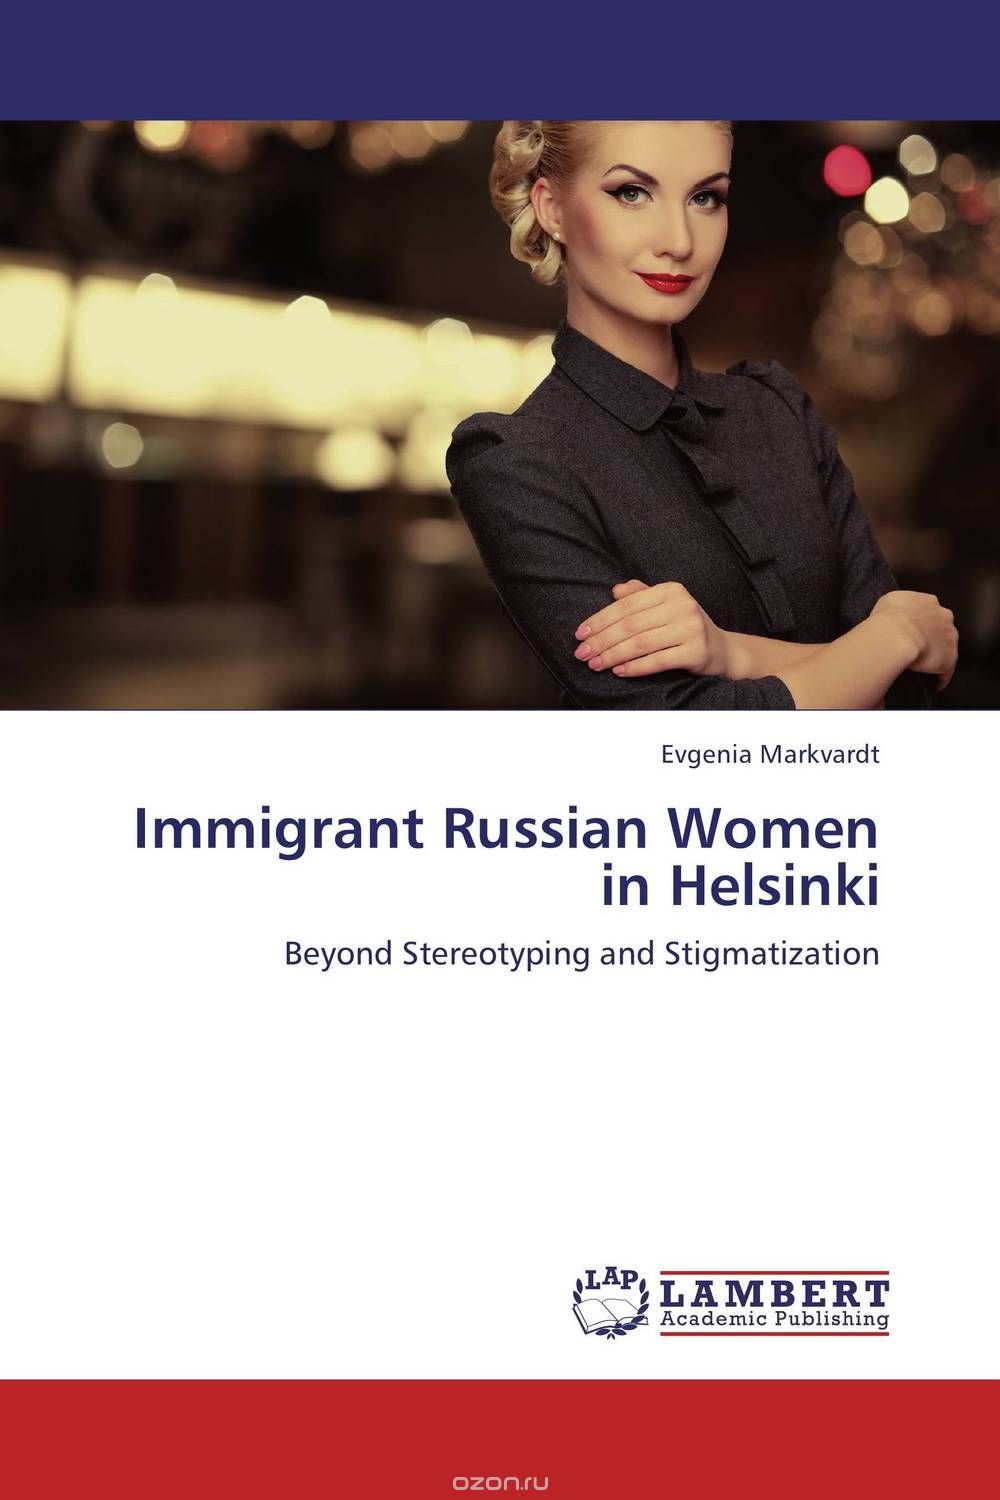 Скачать книгу "Immigrant Russian Women in Helsinki"